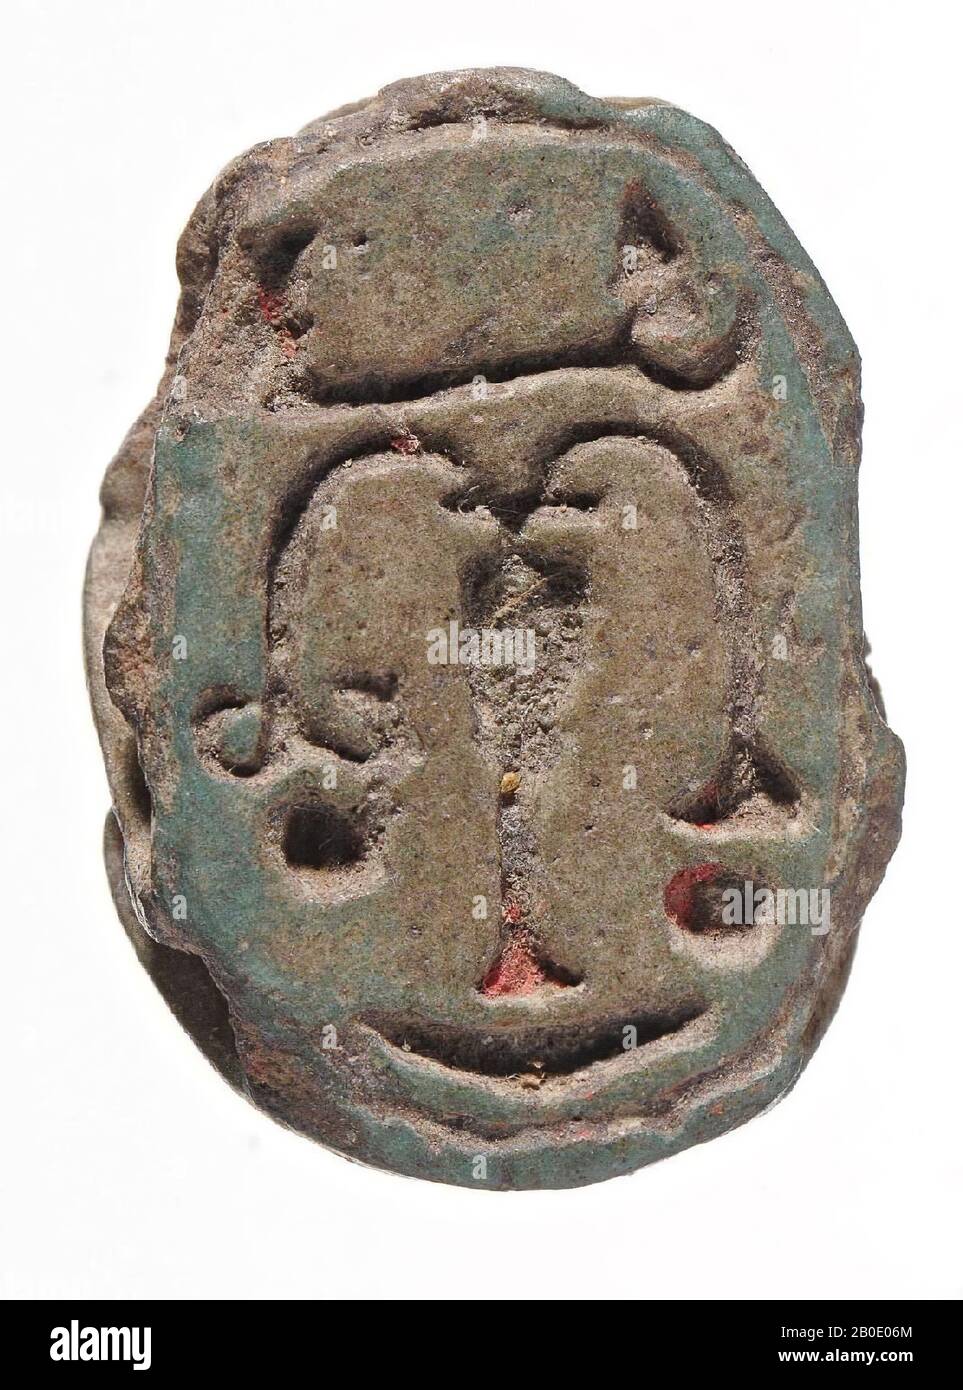 Egitto, foca, scarab, faience, 2 cm, posizione, Egitto Foto Stock